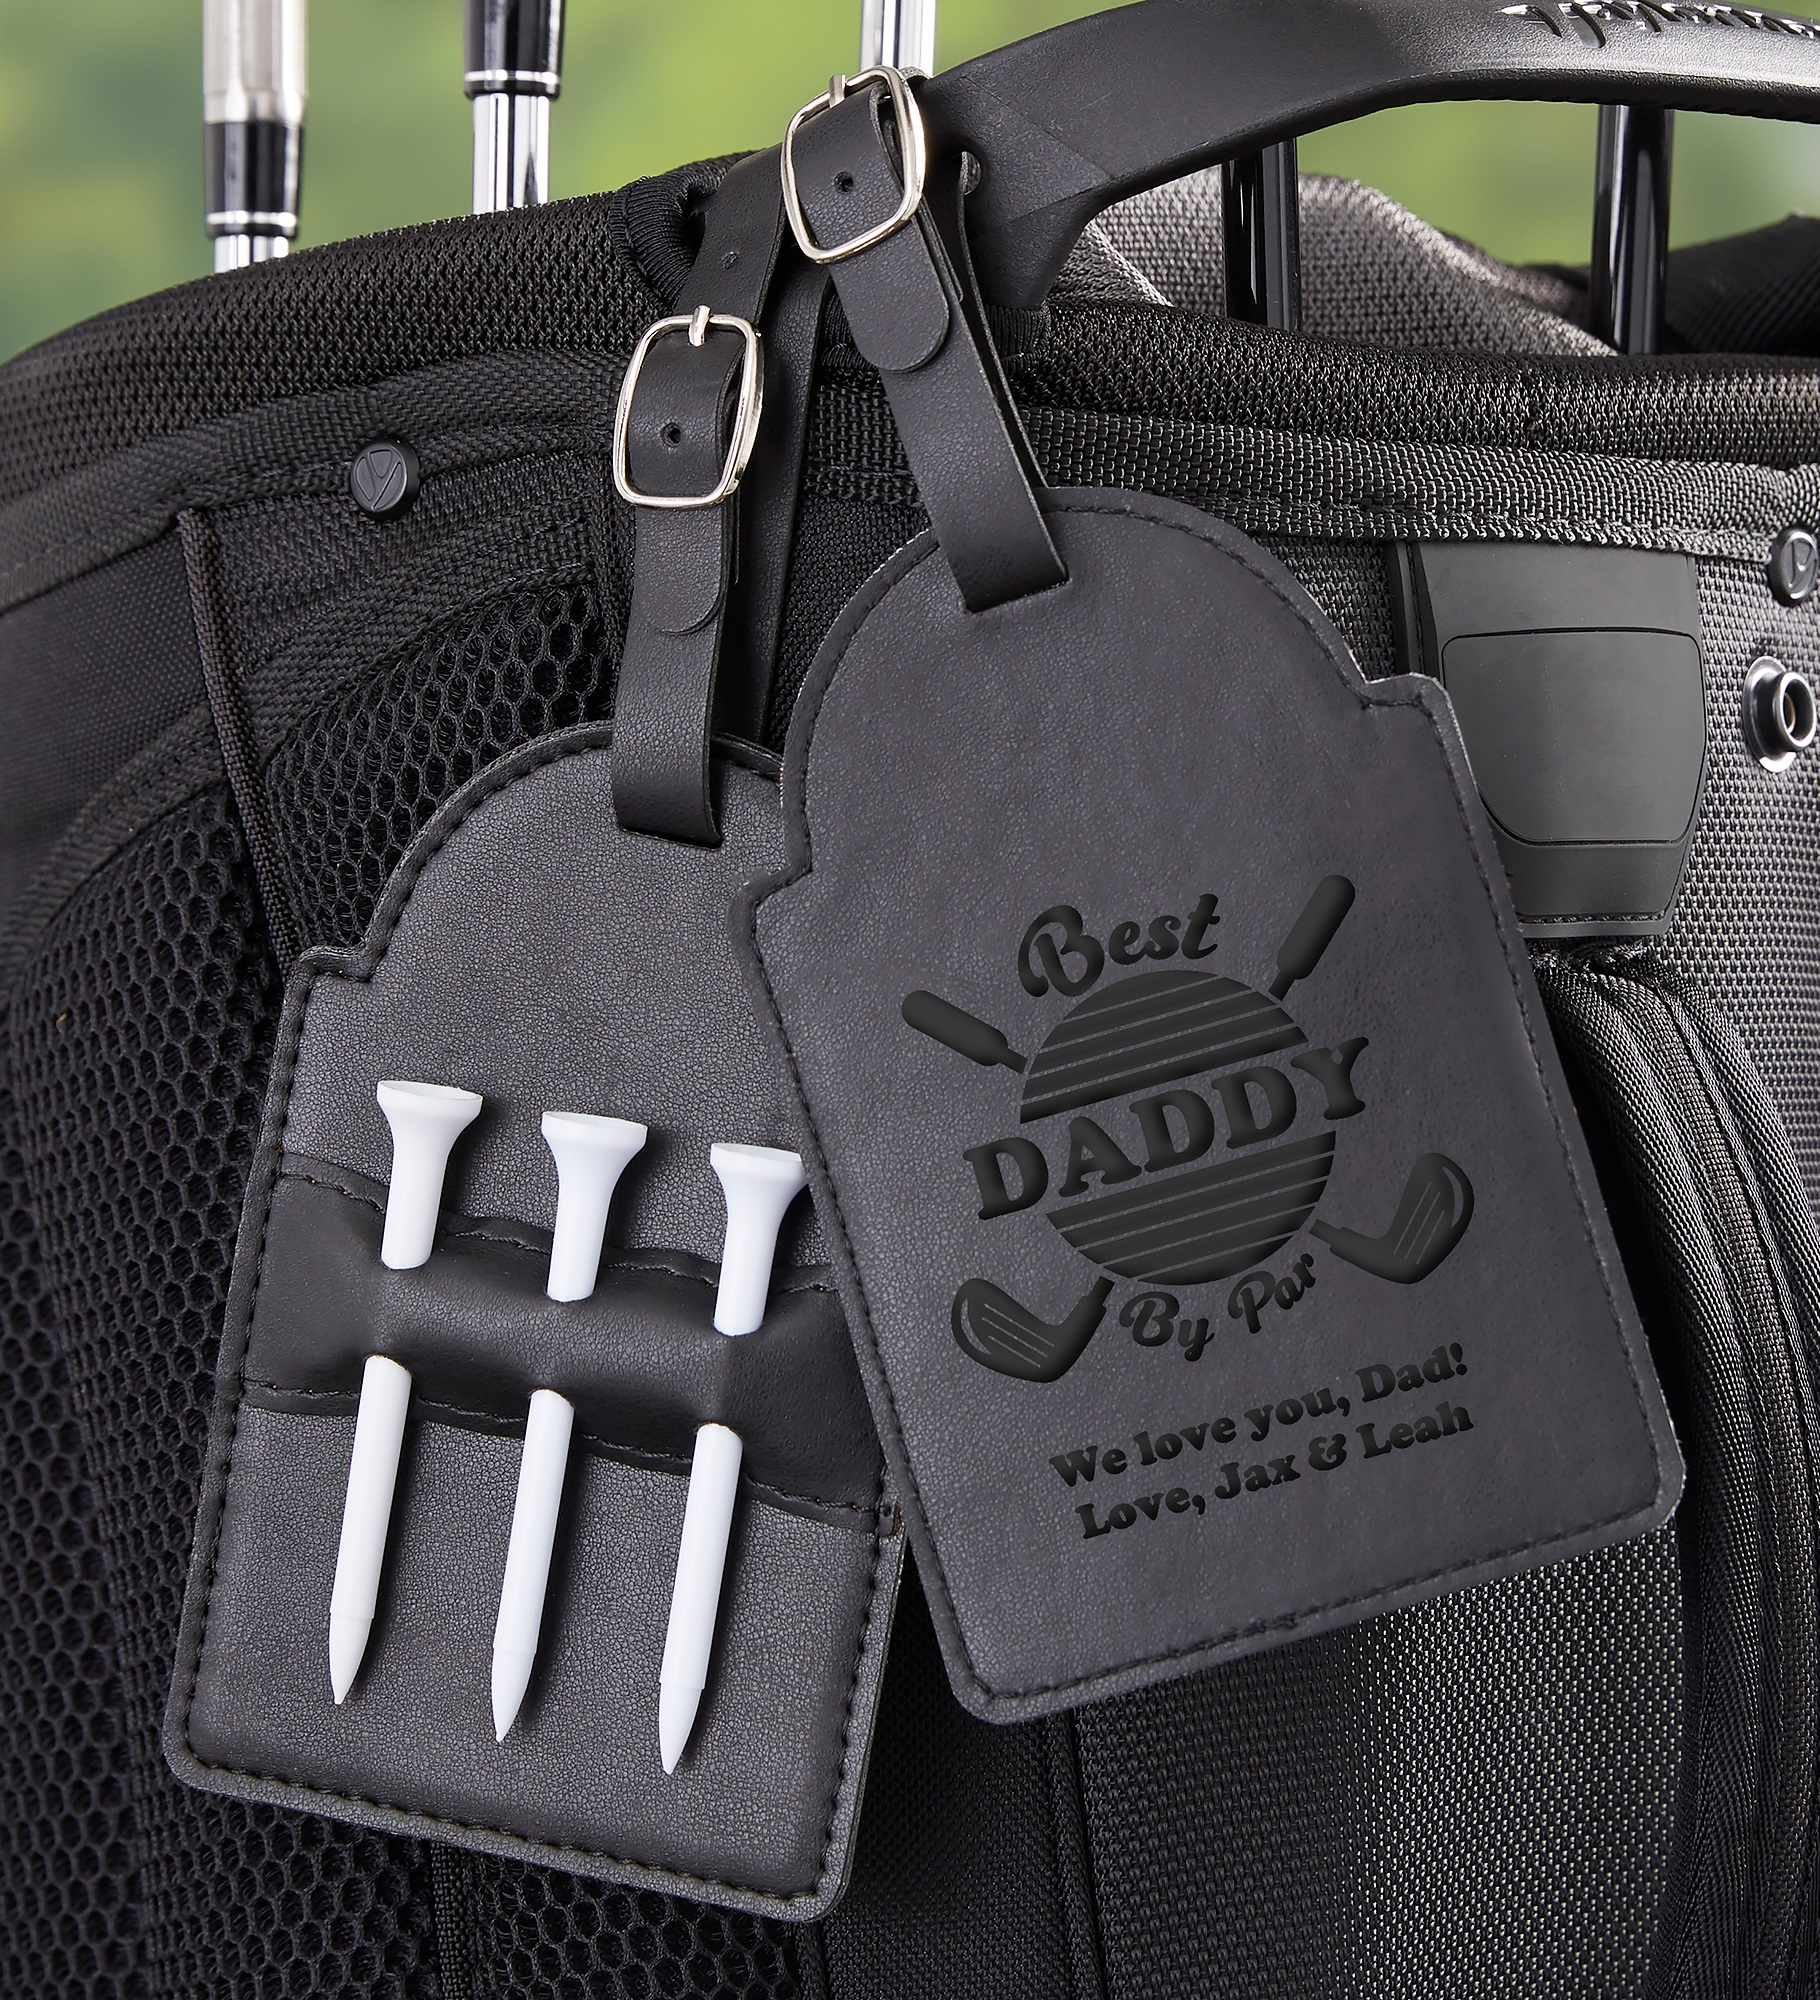 Best Dad By Par Personalized Leatherette Golf Bag Tag